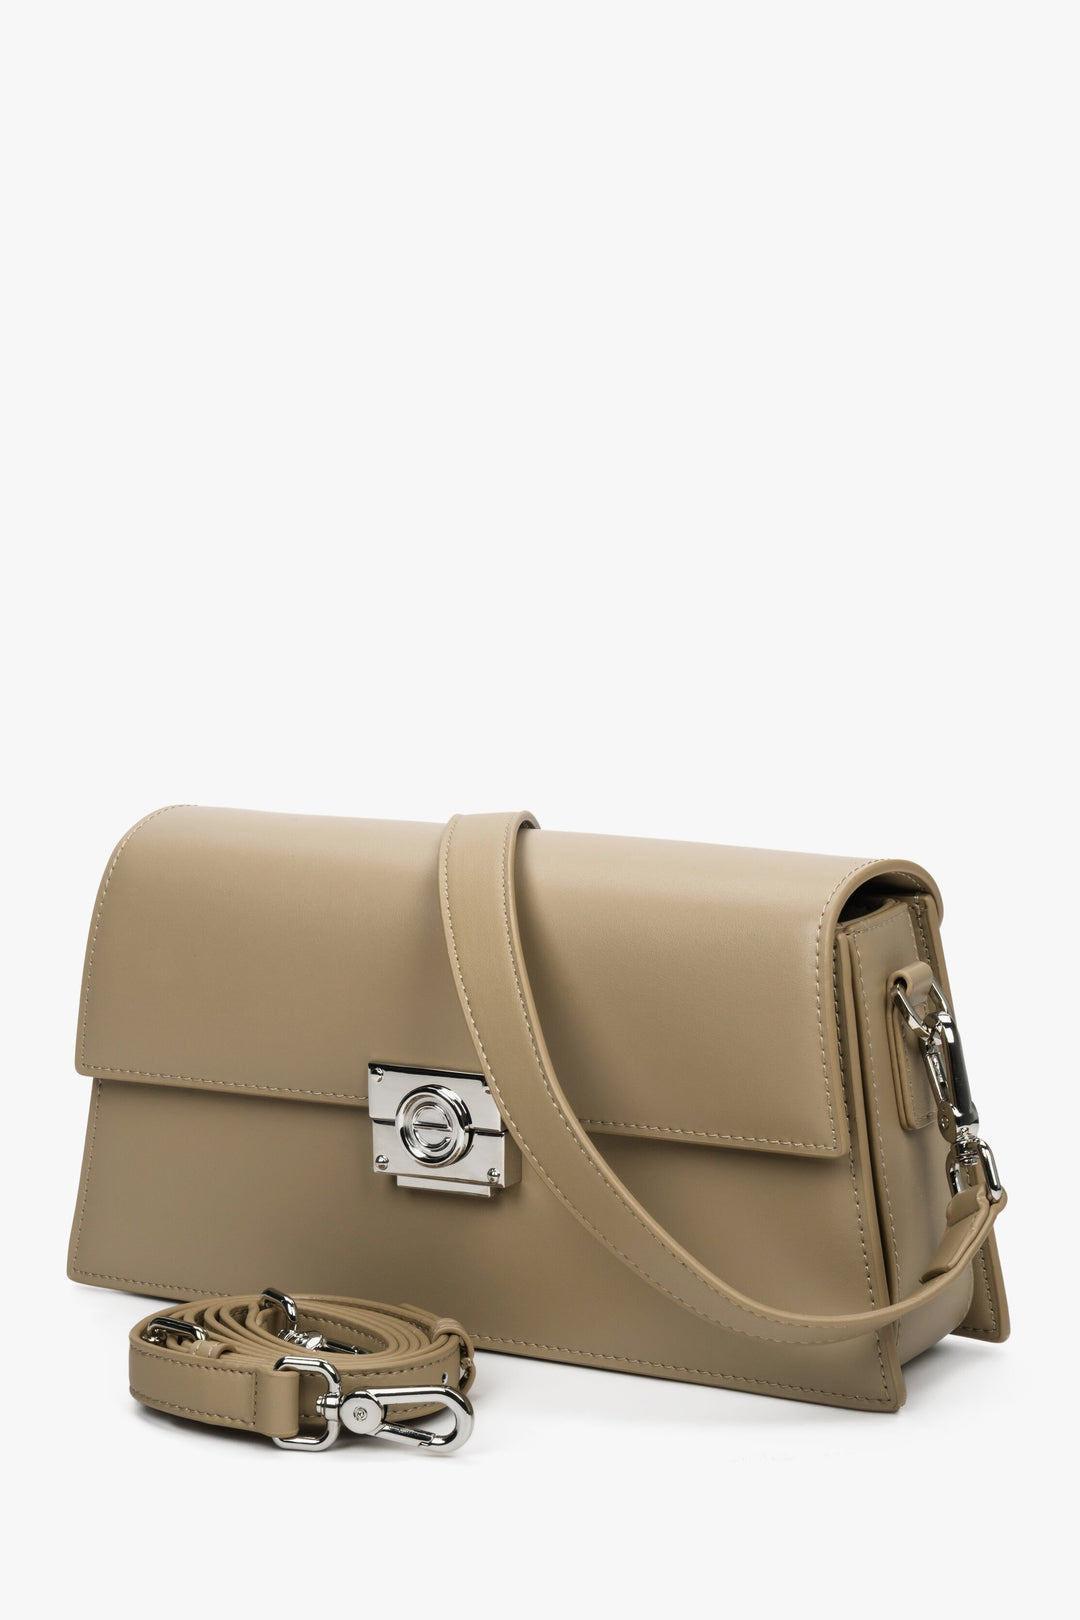 Women's Beige Chain Handbag made of Genuine Leather Estro ER00112501